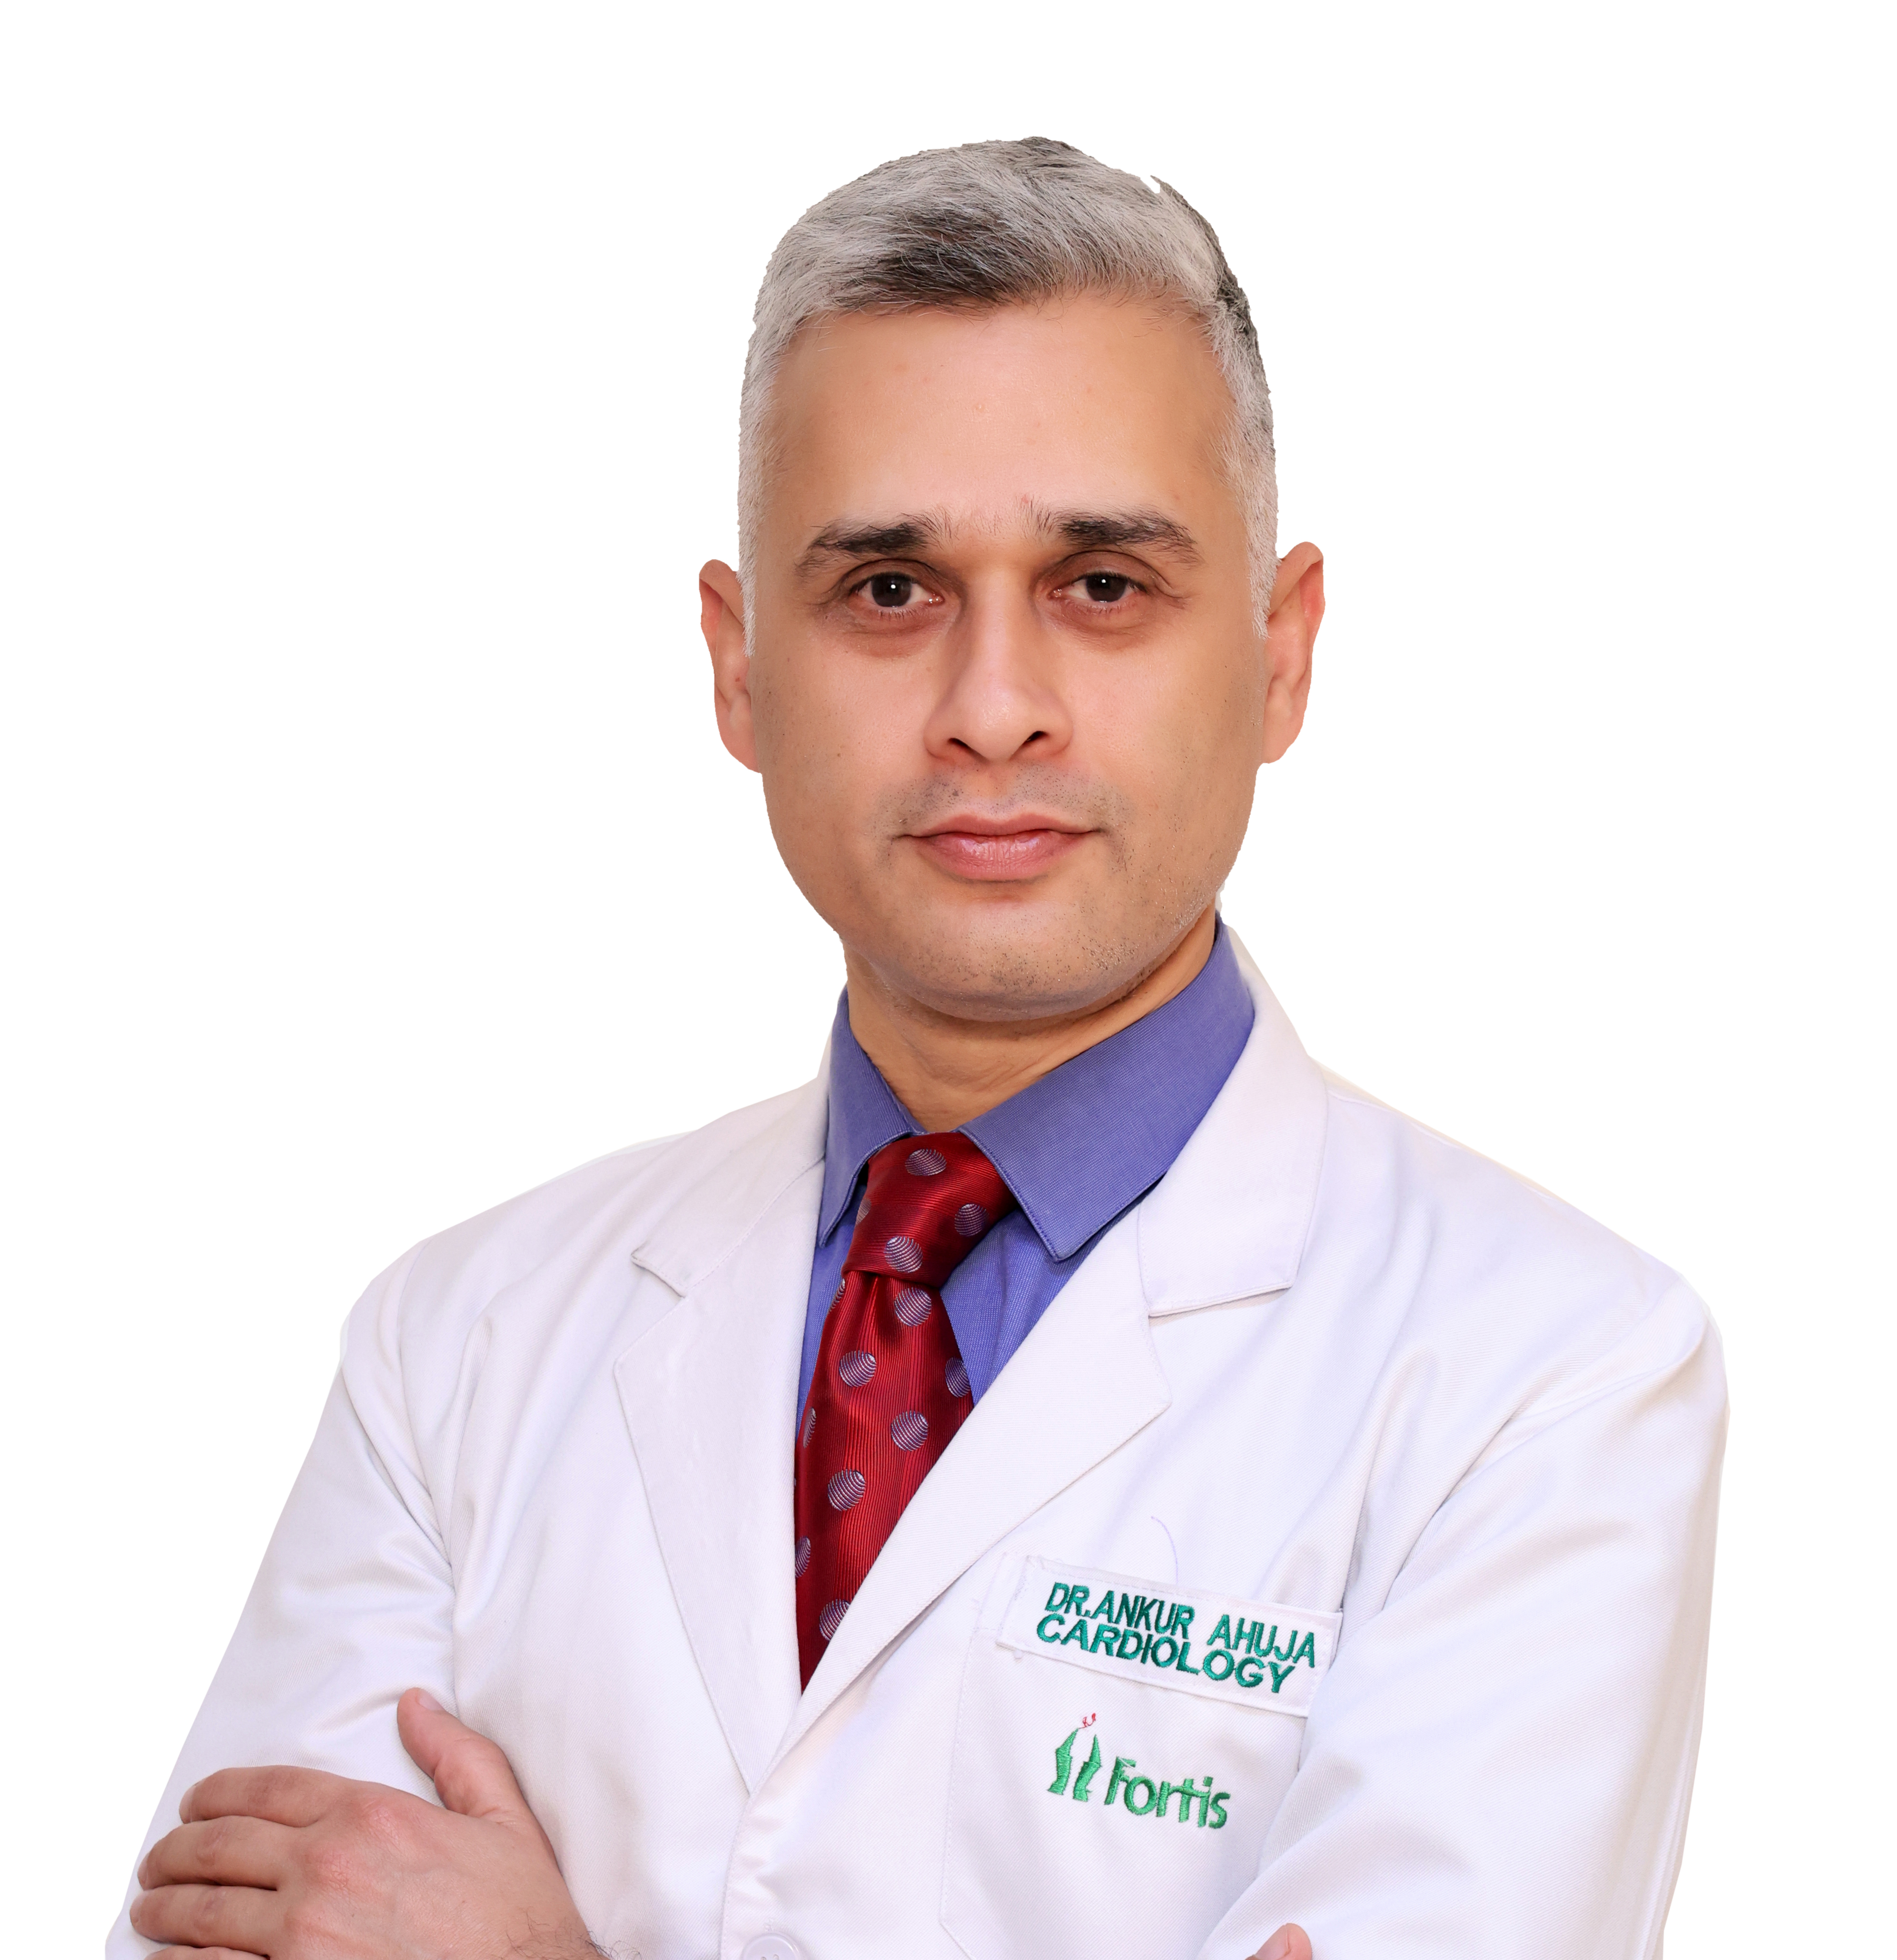 Dr. Ankur Ahuja